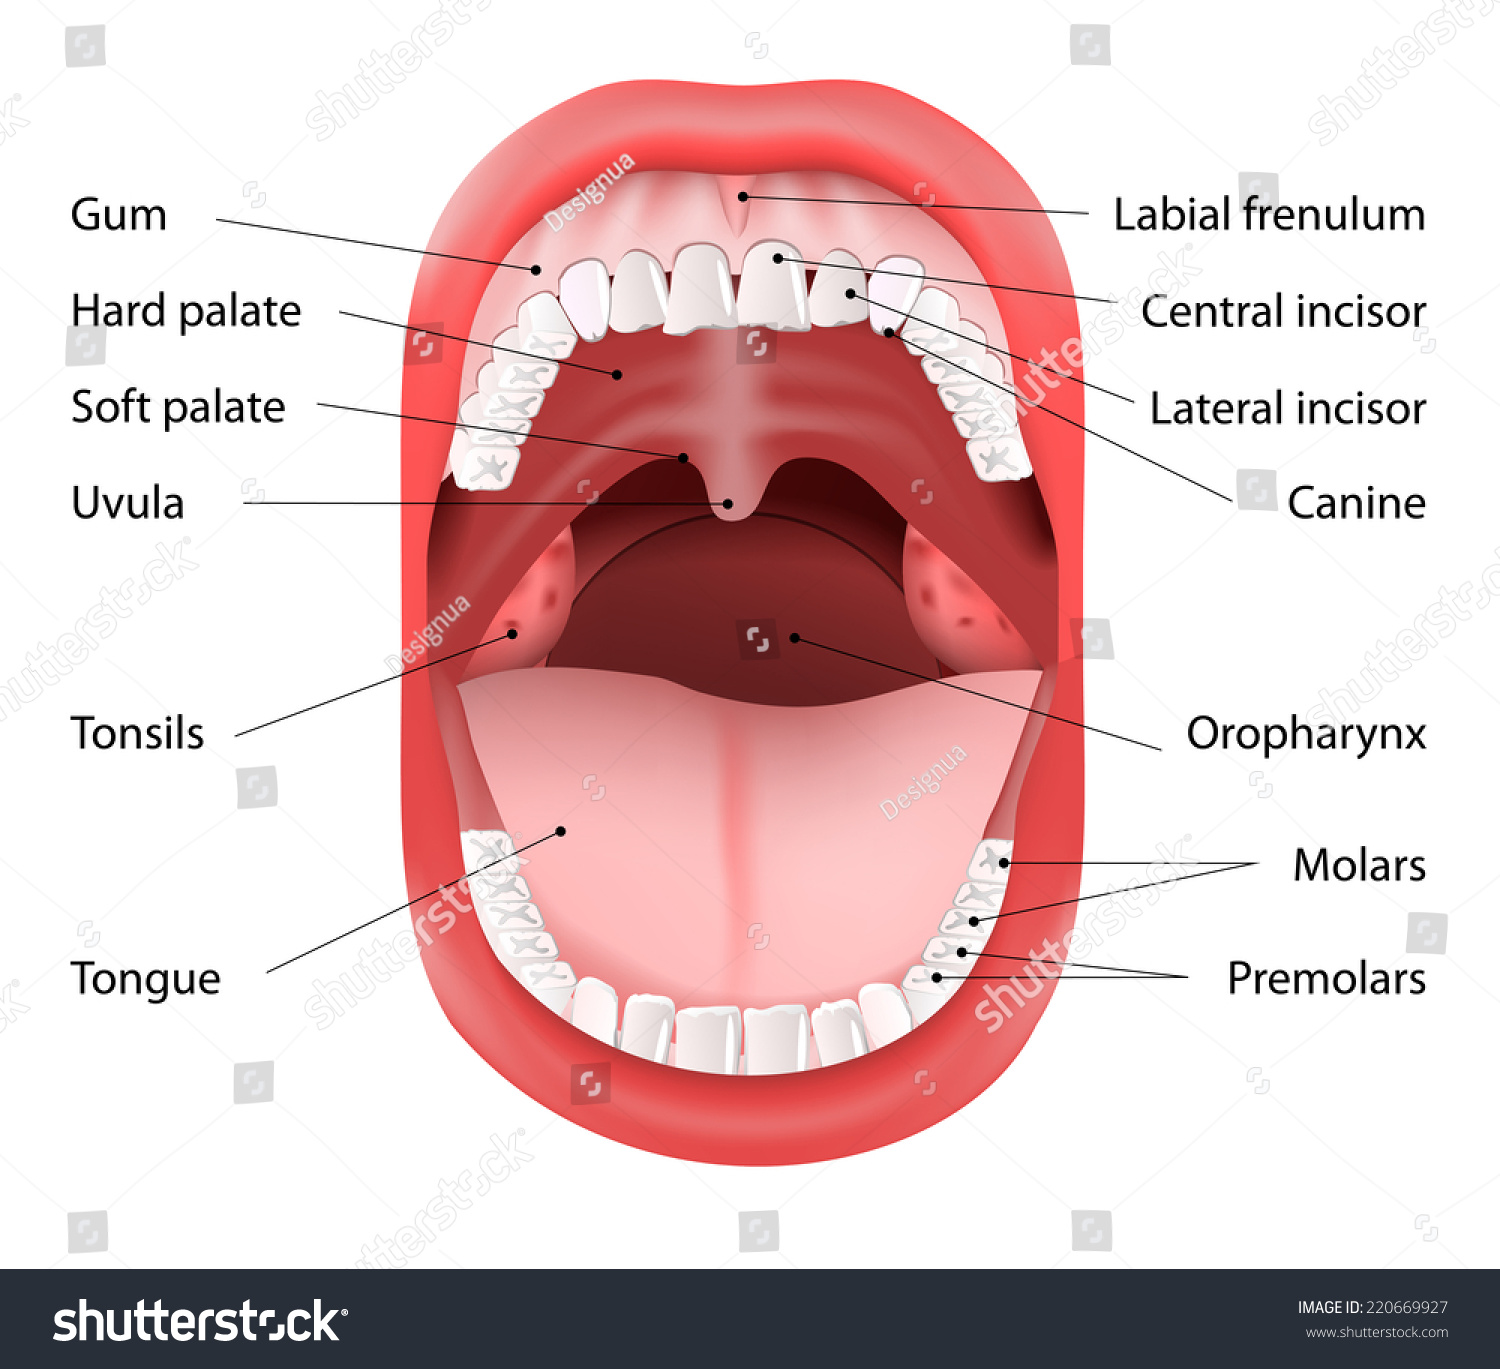 Teeth In Human Mouth 68